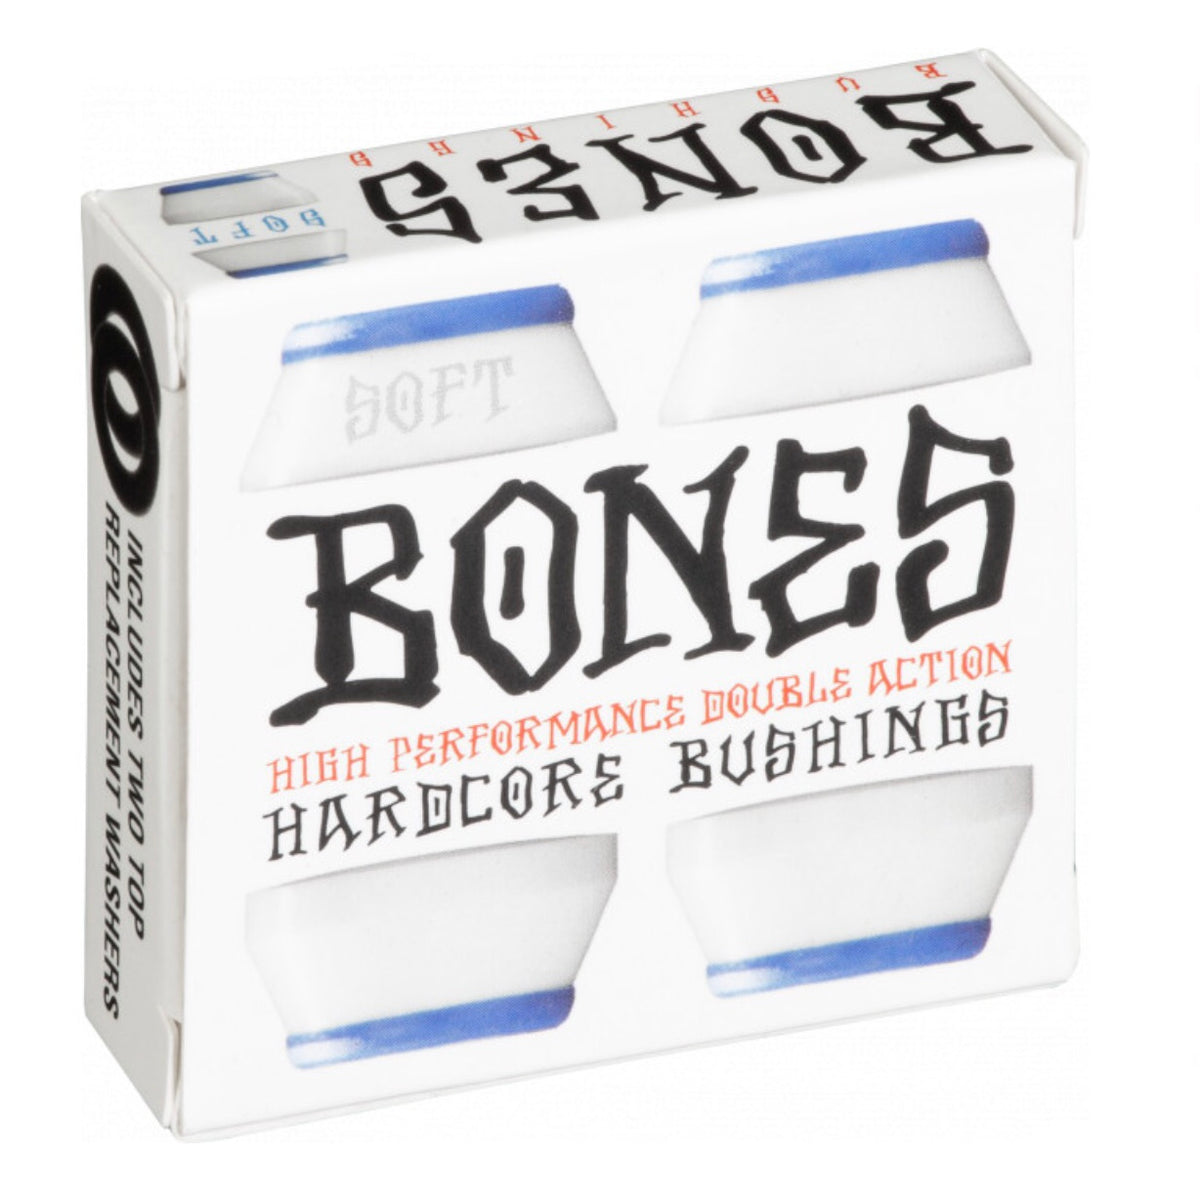 Bones Bushings - Various